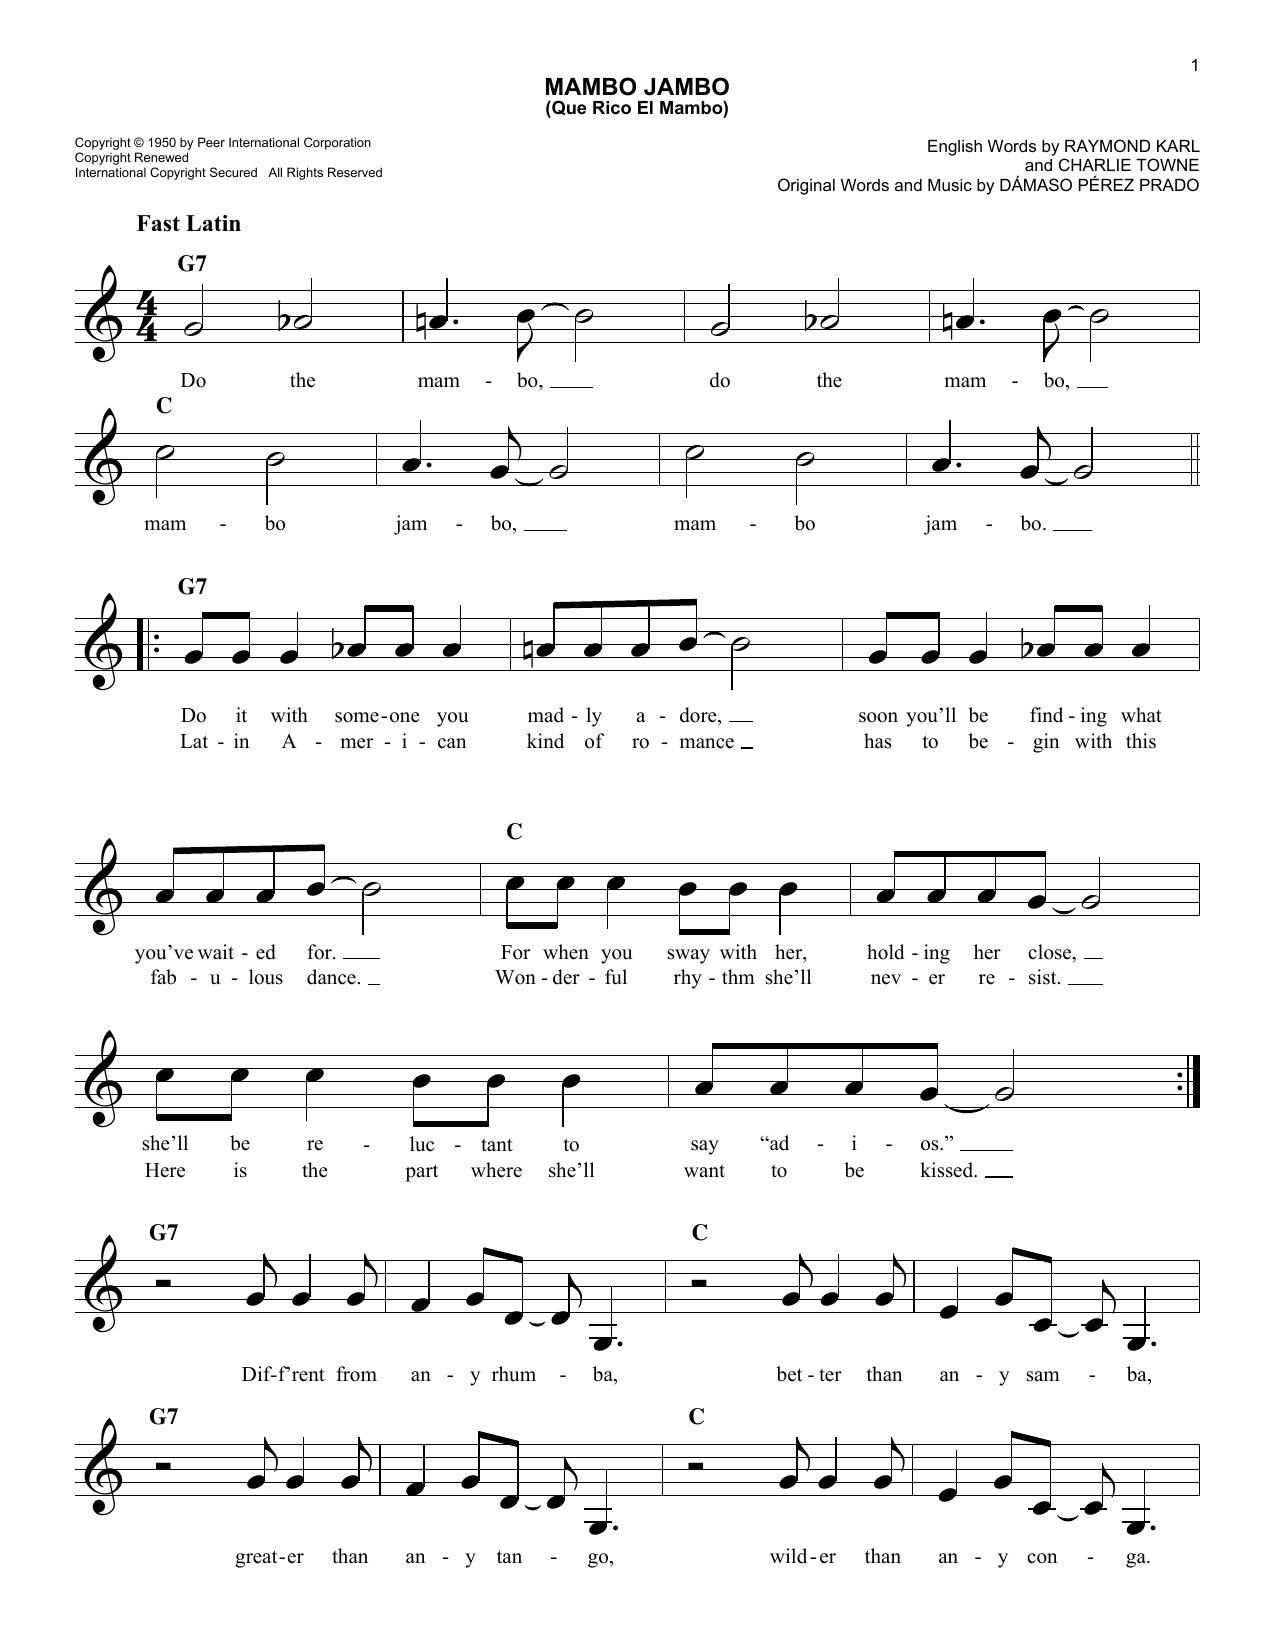 Download Damaso Perez Prado Mambo Jambo (Que Rico El Mambo) Sheet Music and learn how to play Melody Line, Lyrics & Chords PDF digital score in minutes